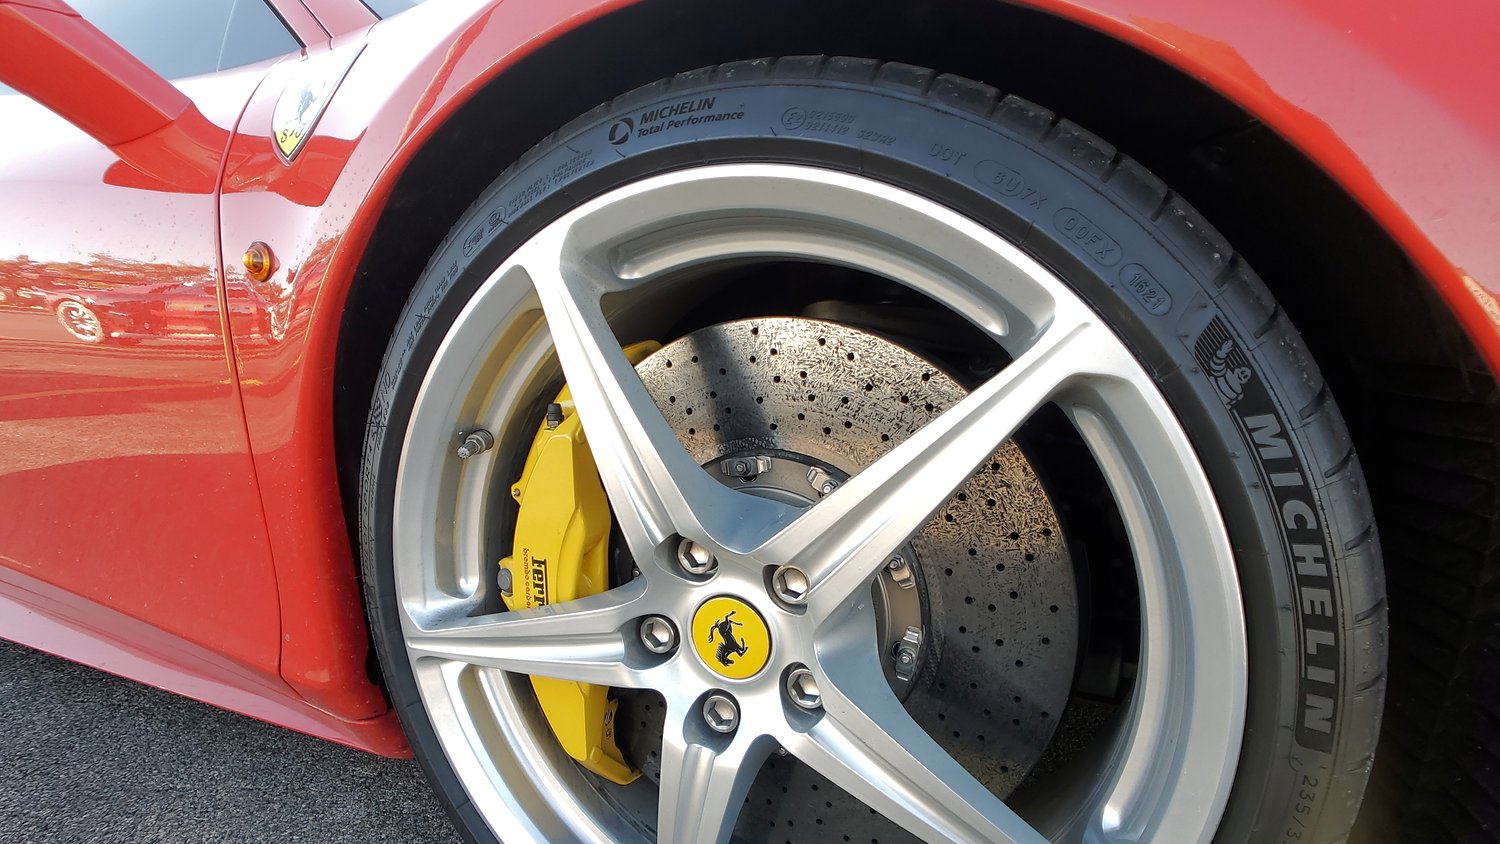 Ferrari brake caliper and vented rotor.